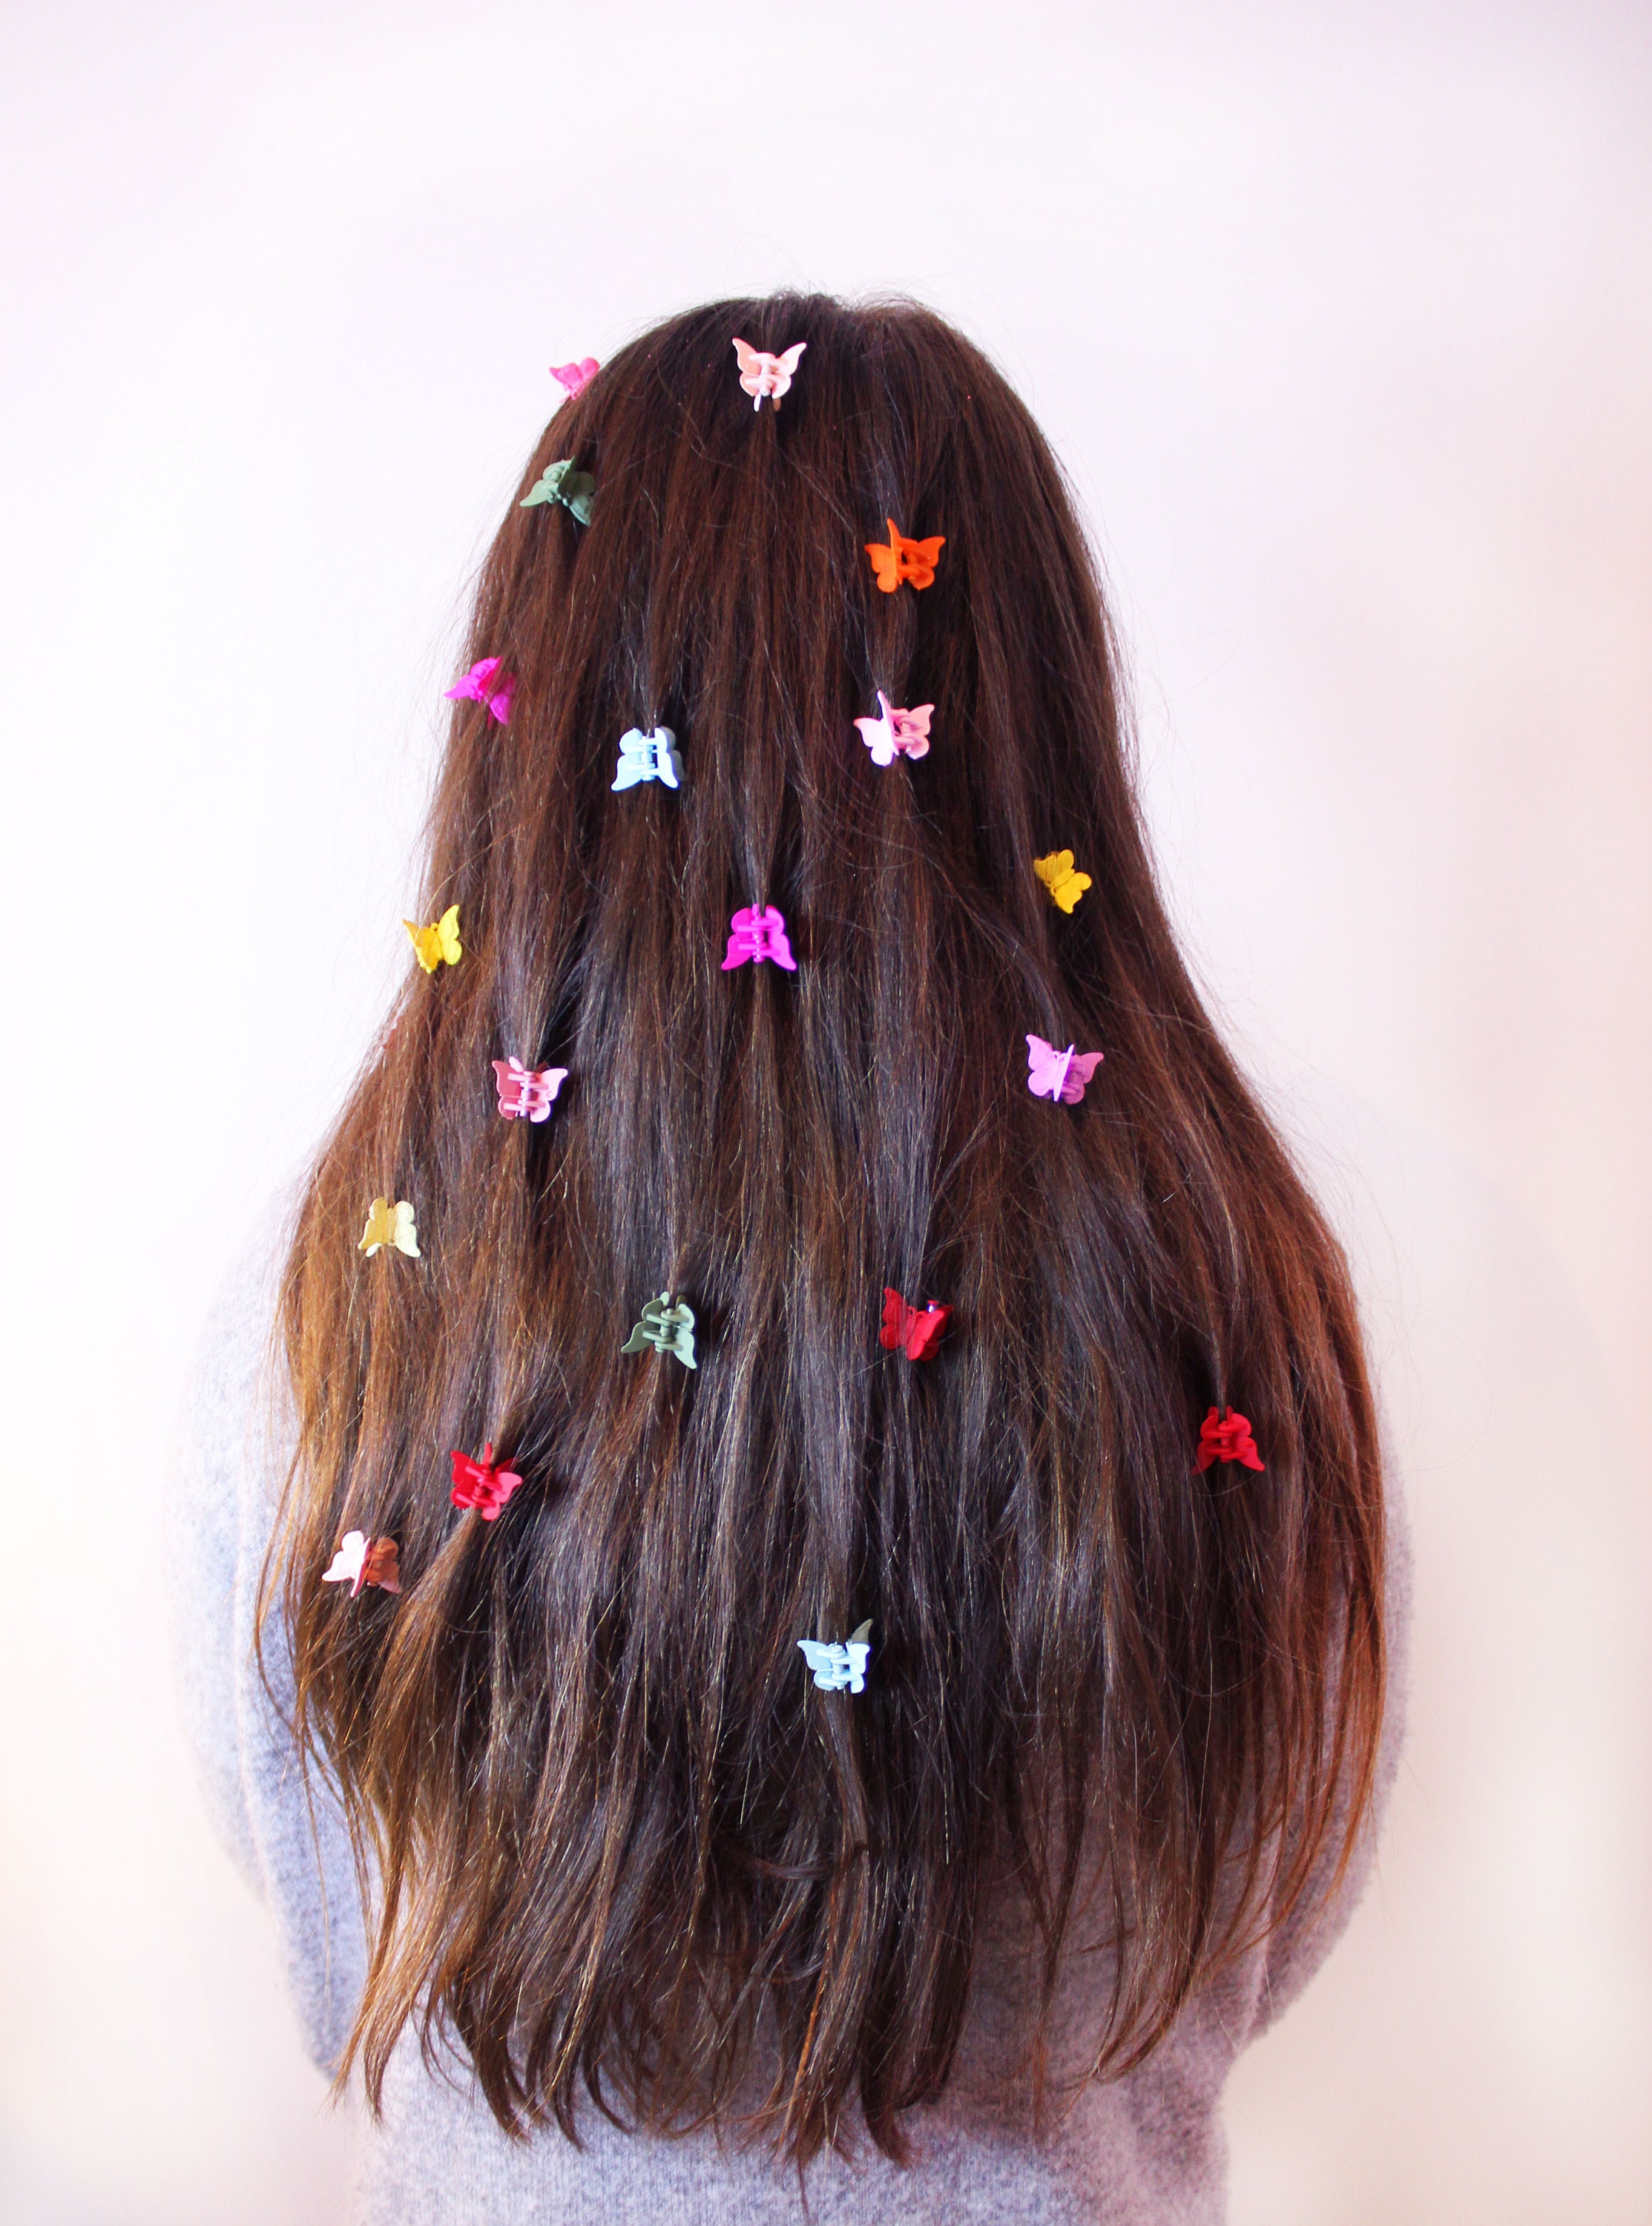 butterfly clips in hair